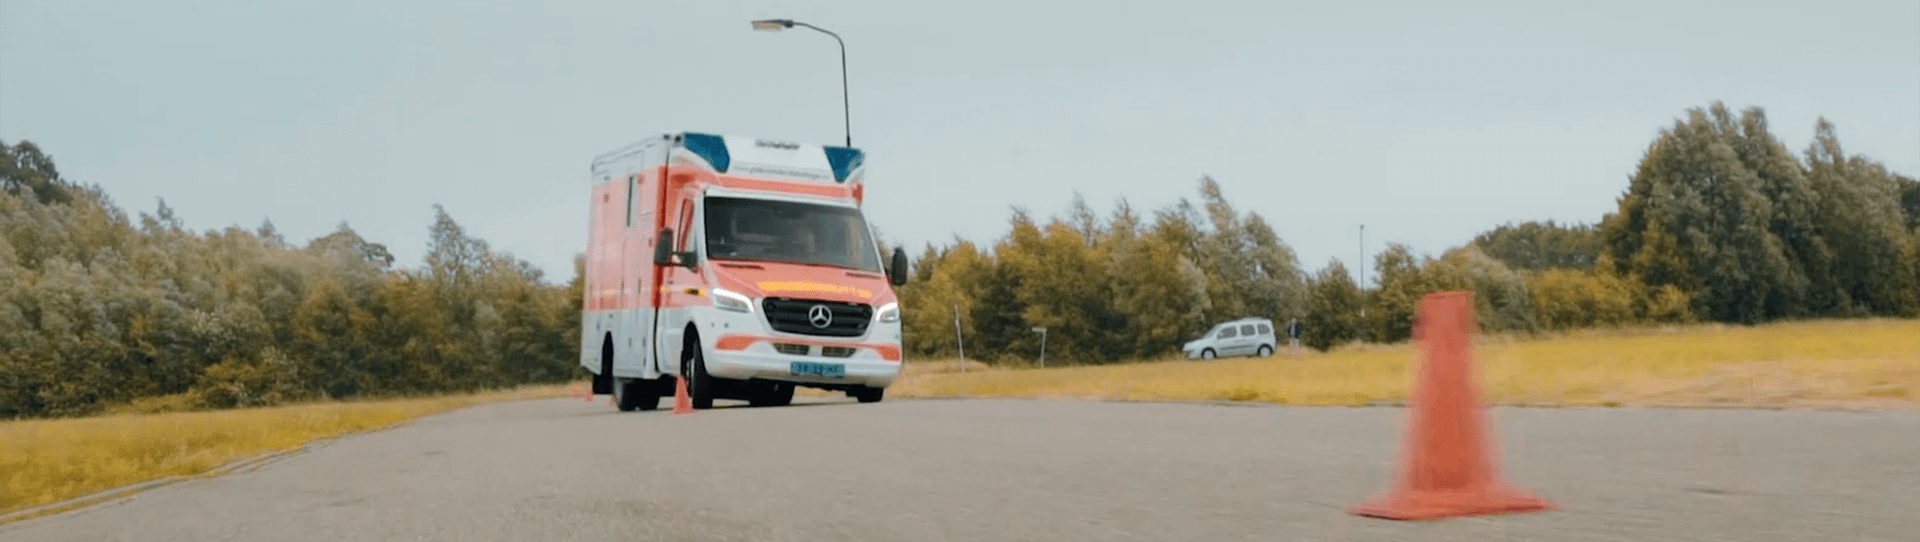 Foto: Duitse ambulance maakt slalom door pionnen